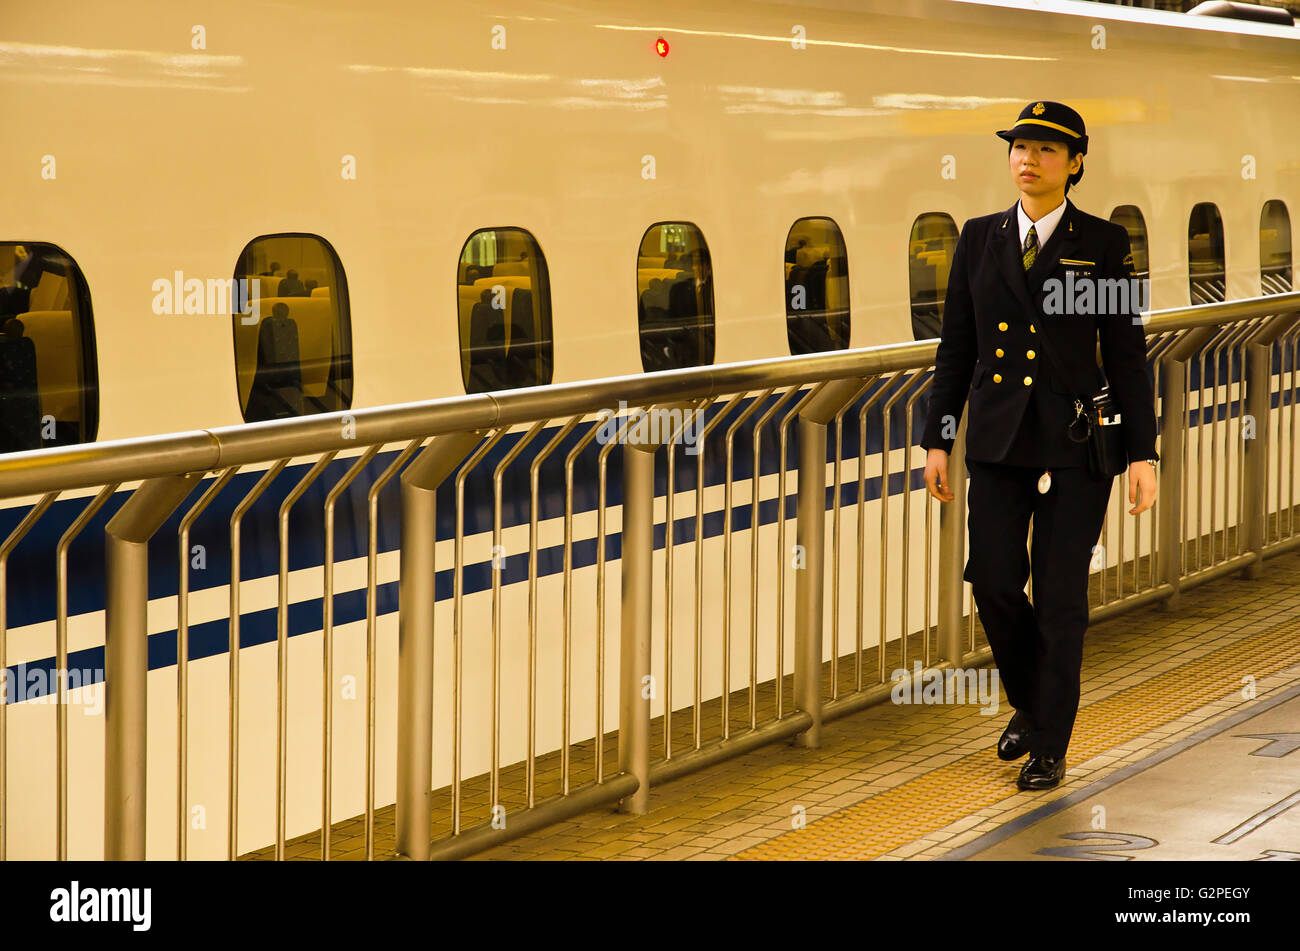 Japan, Tokyo, JR Tokyo station, on the train platform, a woman train driver about thirty years old, in JR uniform, walking to board shinkansen train. Stock Photo